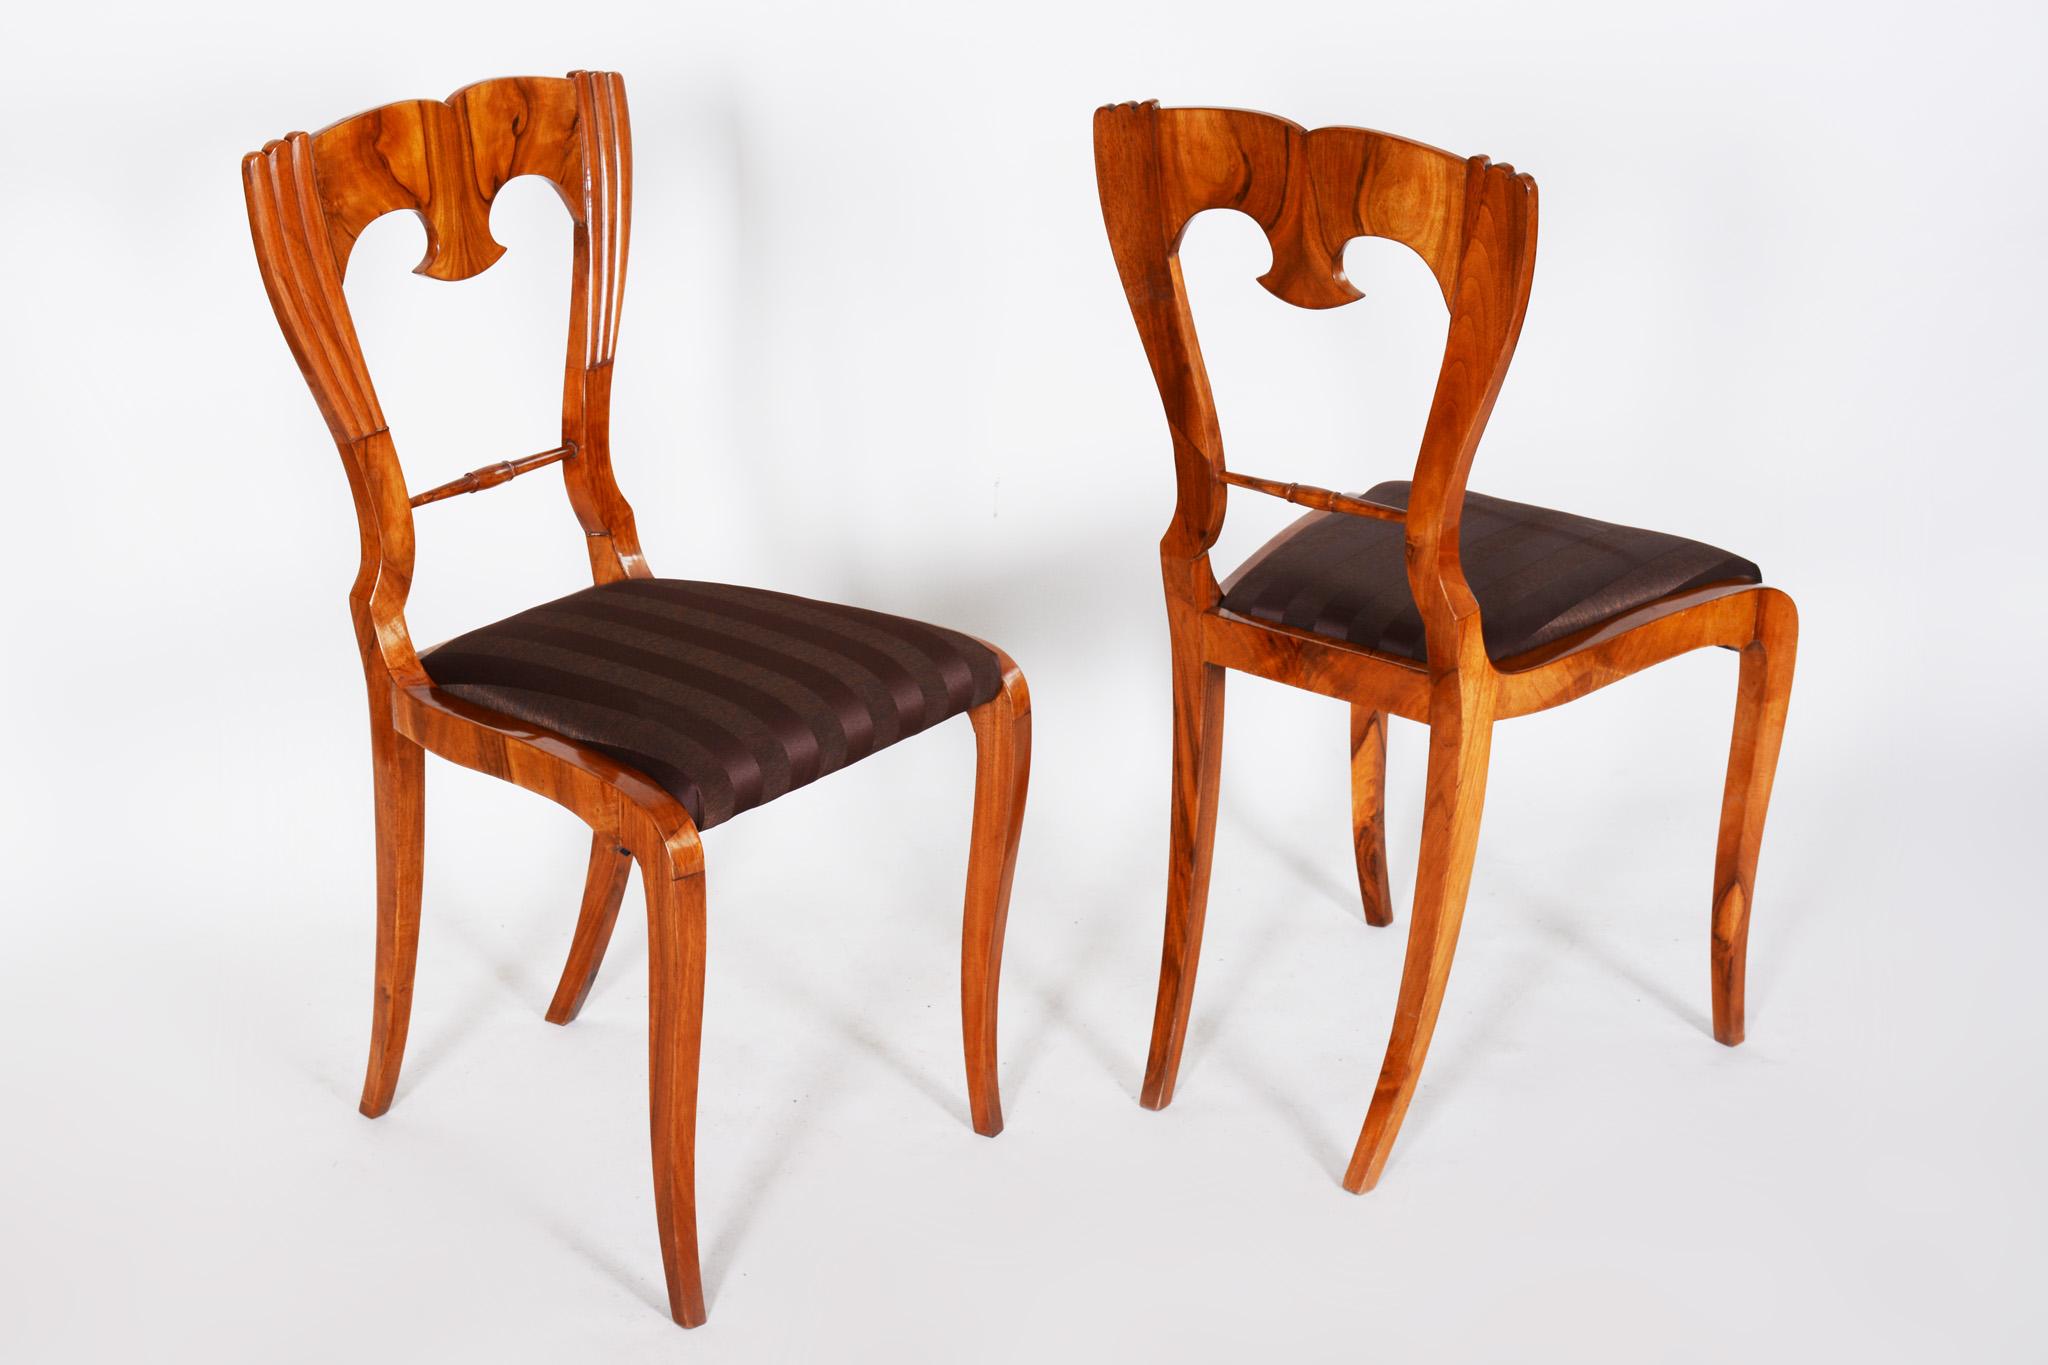 Lacquer 19th Century Walnut Czech Biedermeier Chairs Set of 4 Pieces, 1840-1849 For Sale